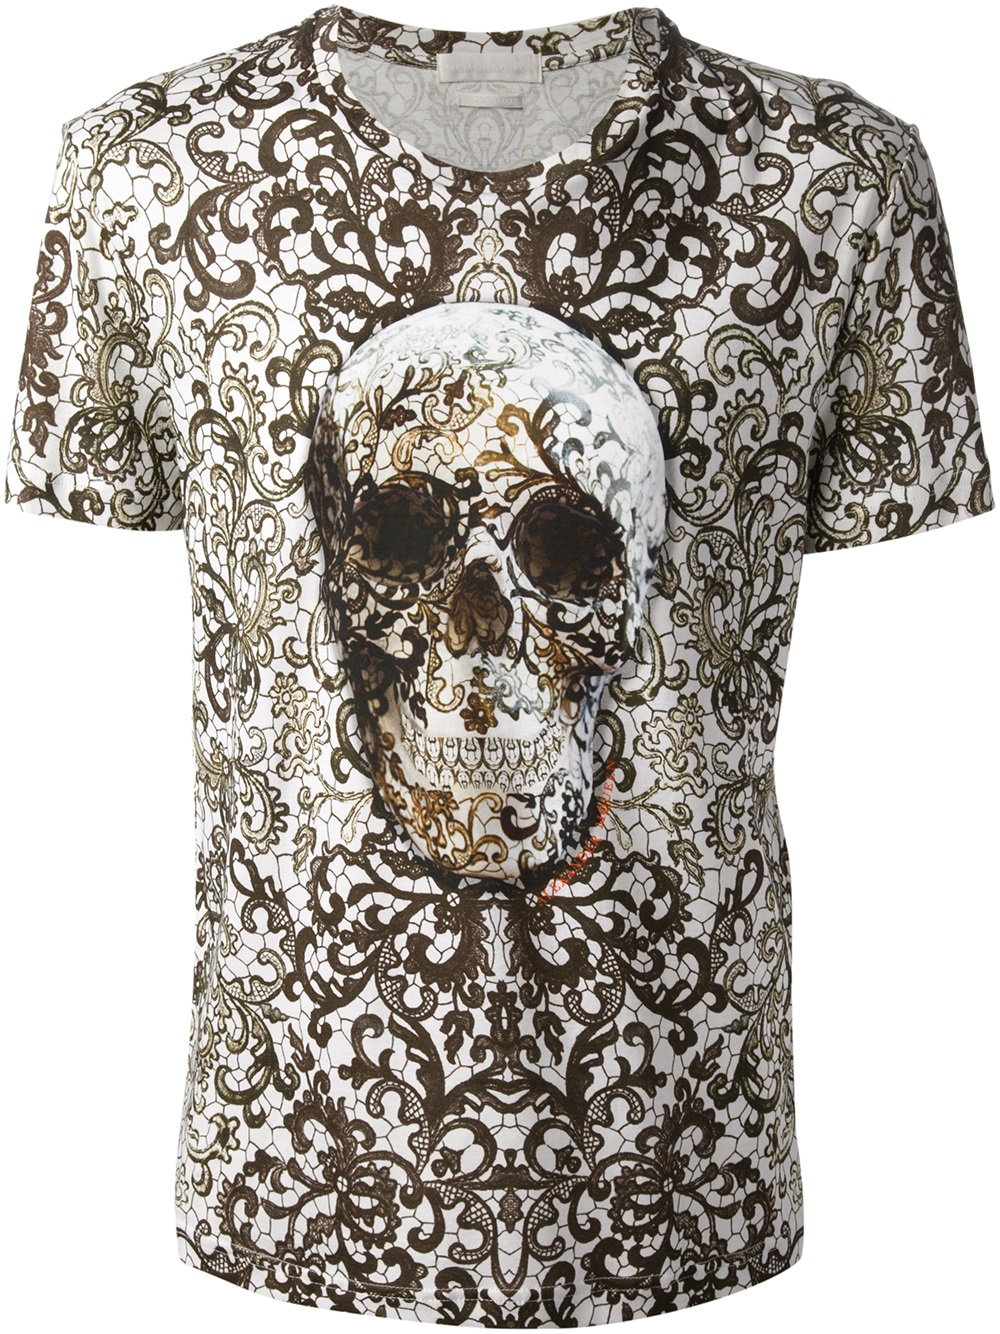 Lyst - Alexander Mcqueen Lace Skull Print Tshirt in Black for Men